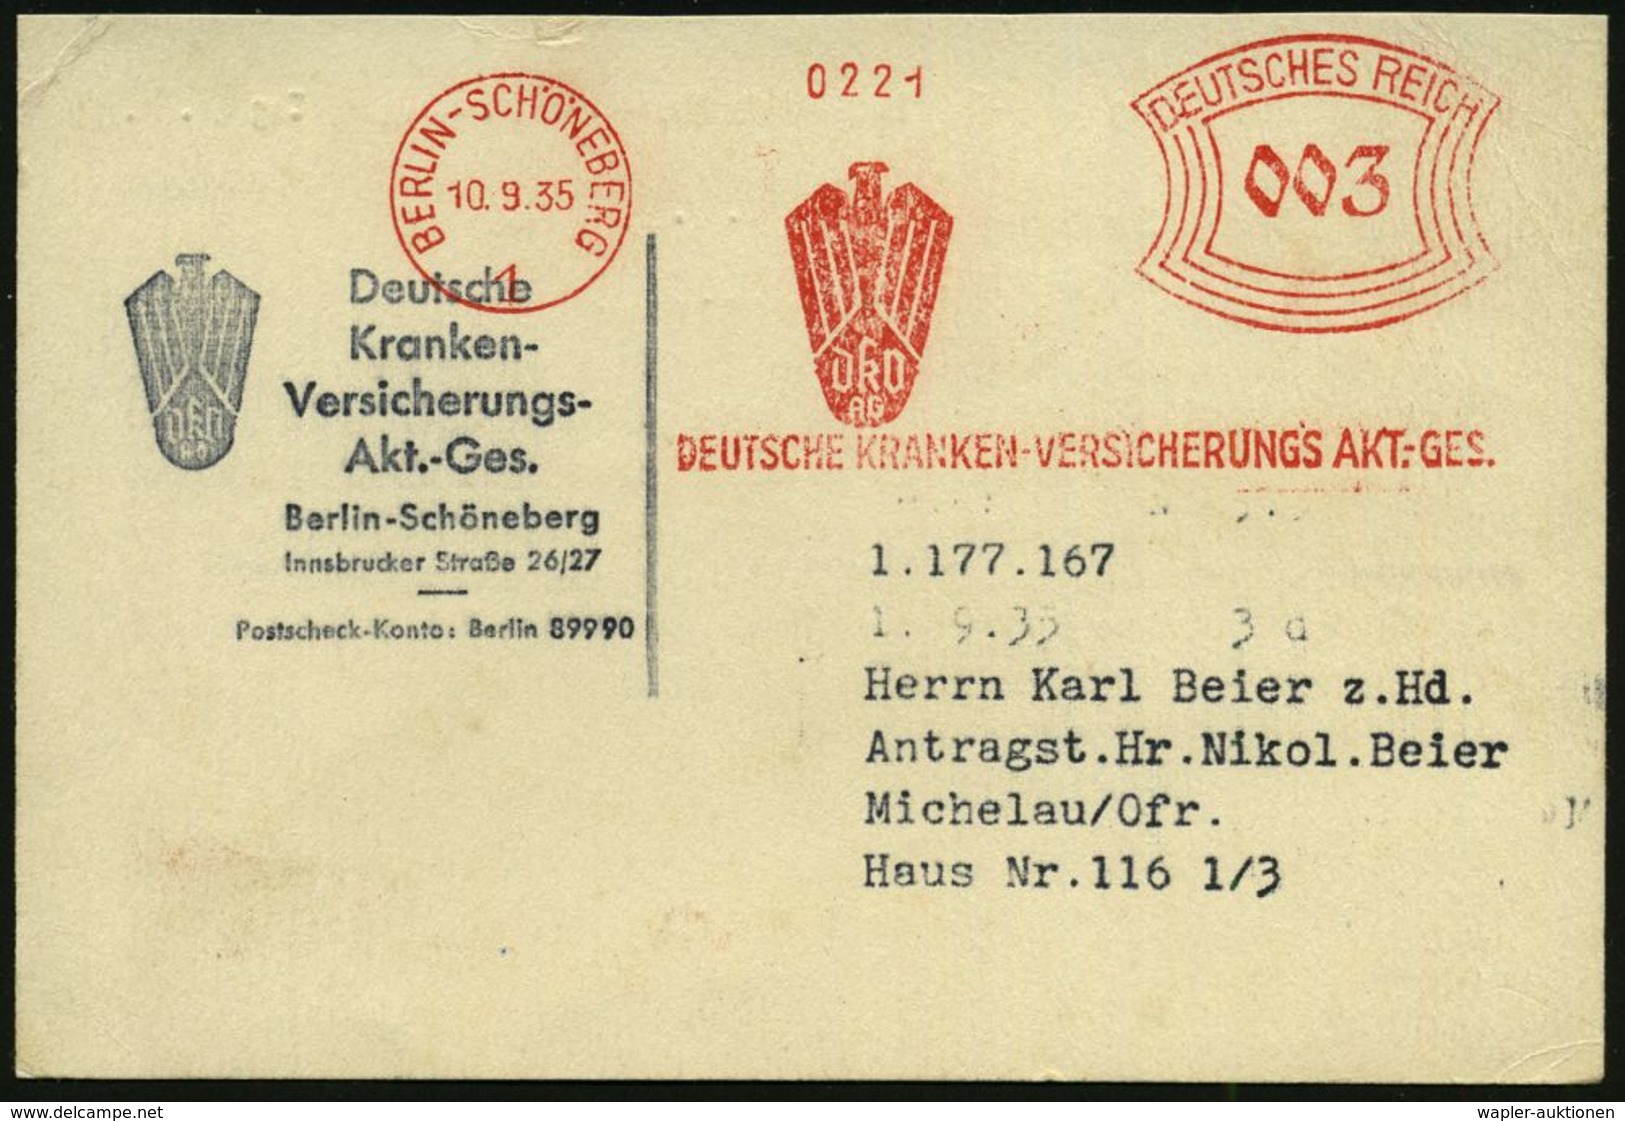 KRANKENKASSE / KRANKEN-VERSICHERUNG : BERLIN-SCHÖNEBERG/ 1/ DkV/ AG/ DEUTSCHE KRANKEN-VERSICHERUNGS-AG. 1935 (10.9.) AFS - Medicine